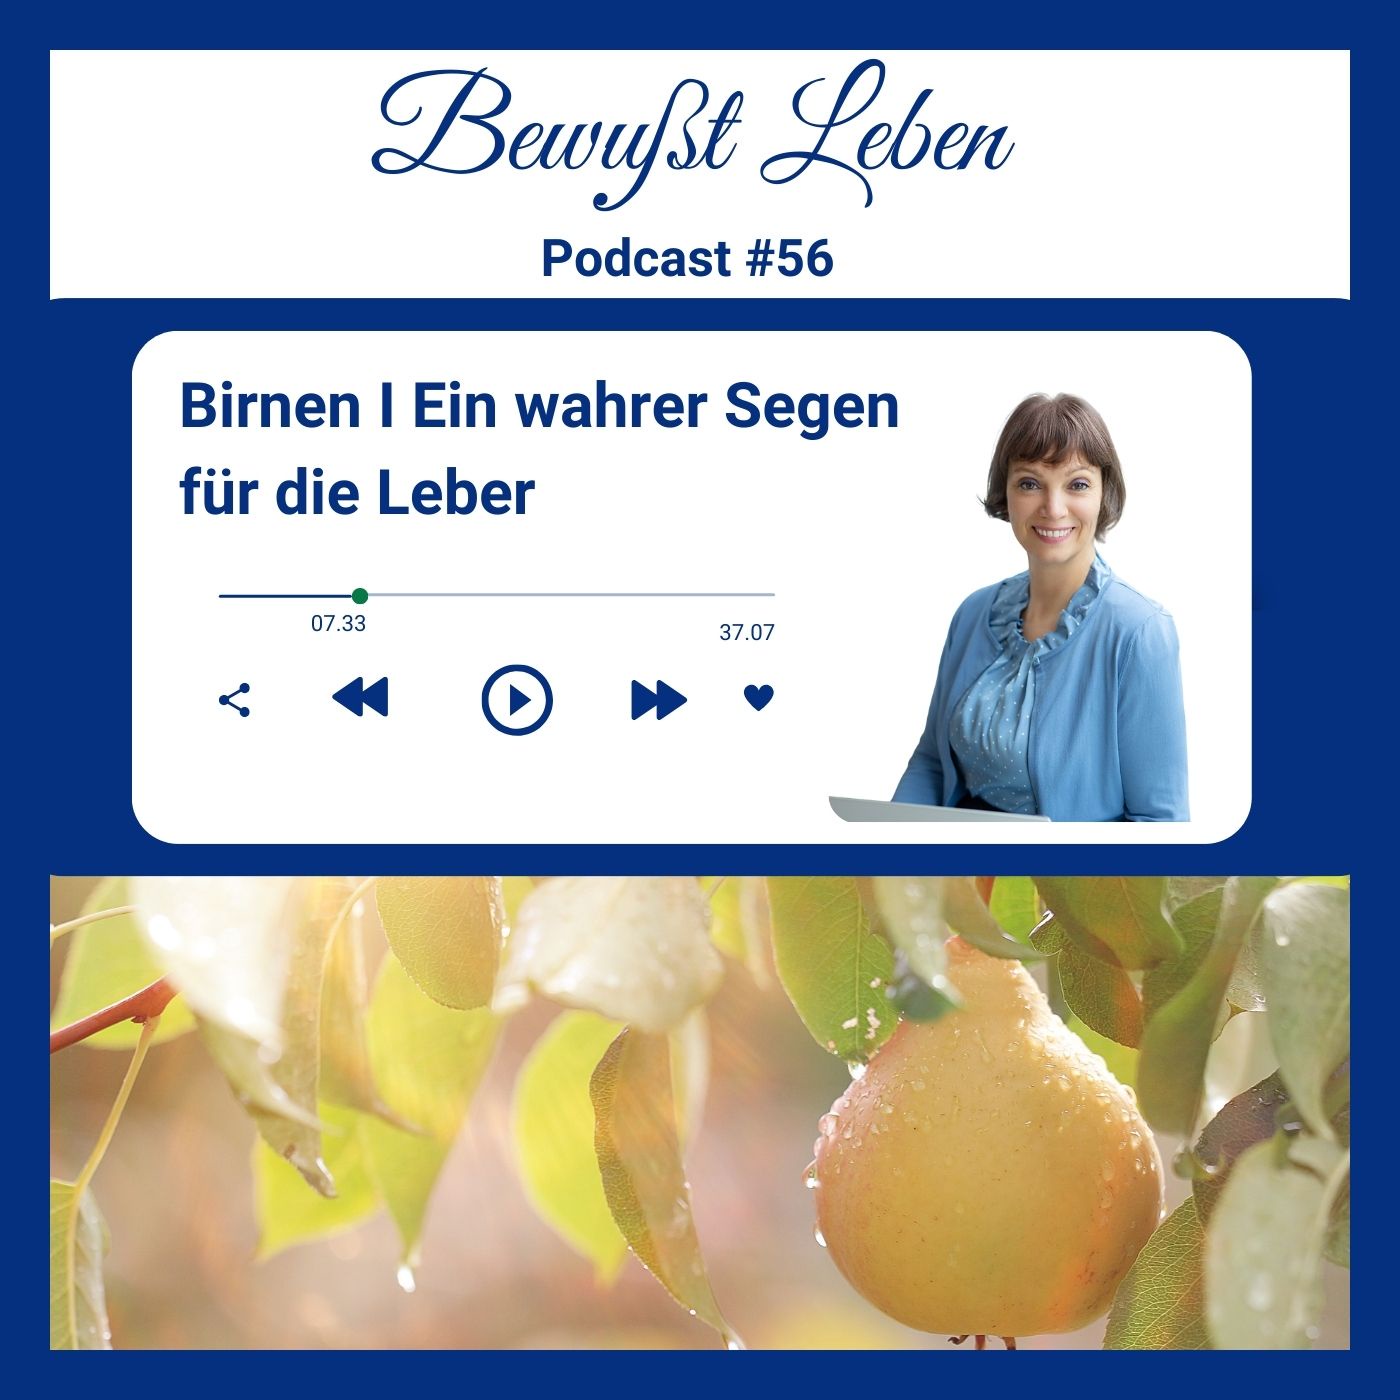 Birnen I Ein wahrer Segen für die Leber I 4 Tips & Rezept I Podcast #56